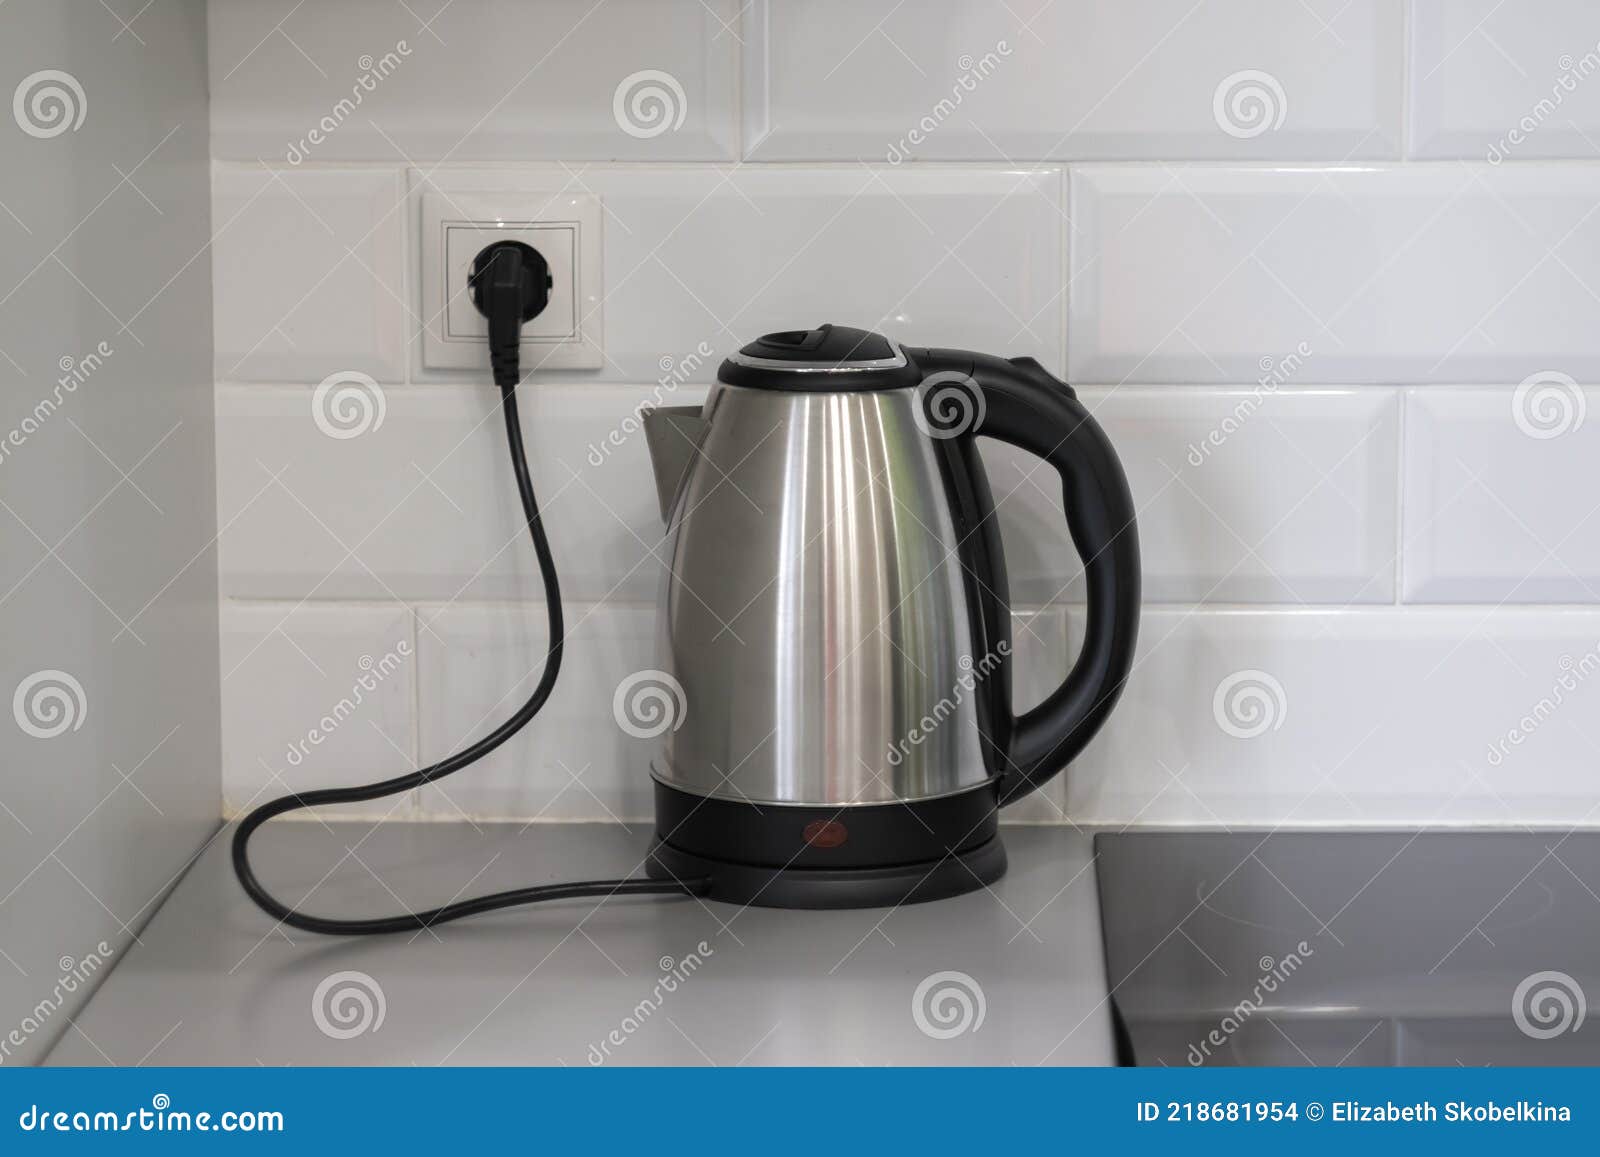 https://thumbs.dreamstime.com/z/electric-metallic-kettle-plug-socket-electric-metallic-kettle-plug-socket-white-brick-wall-behind-kettle-218681954.jpg